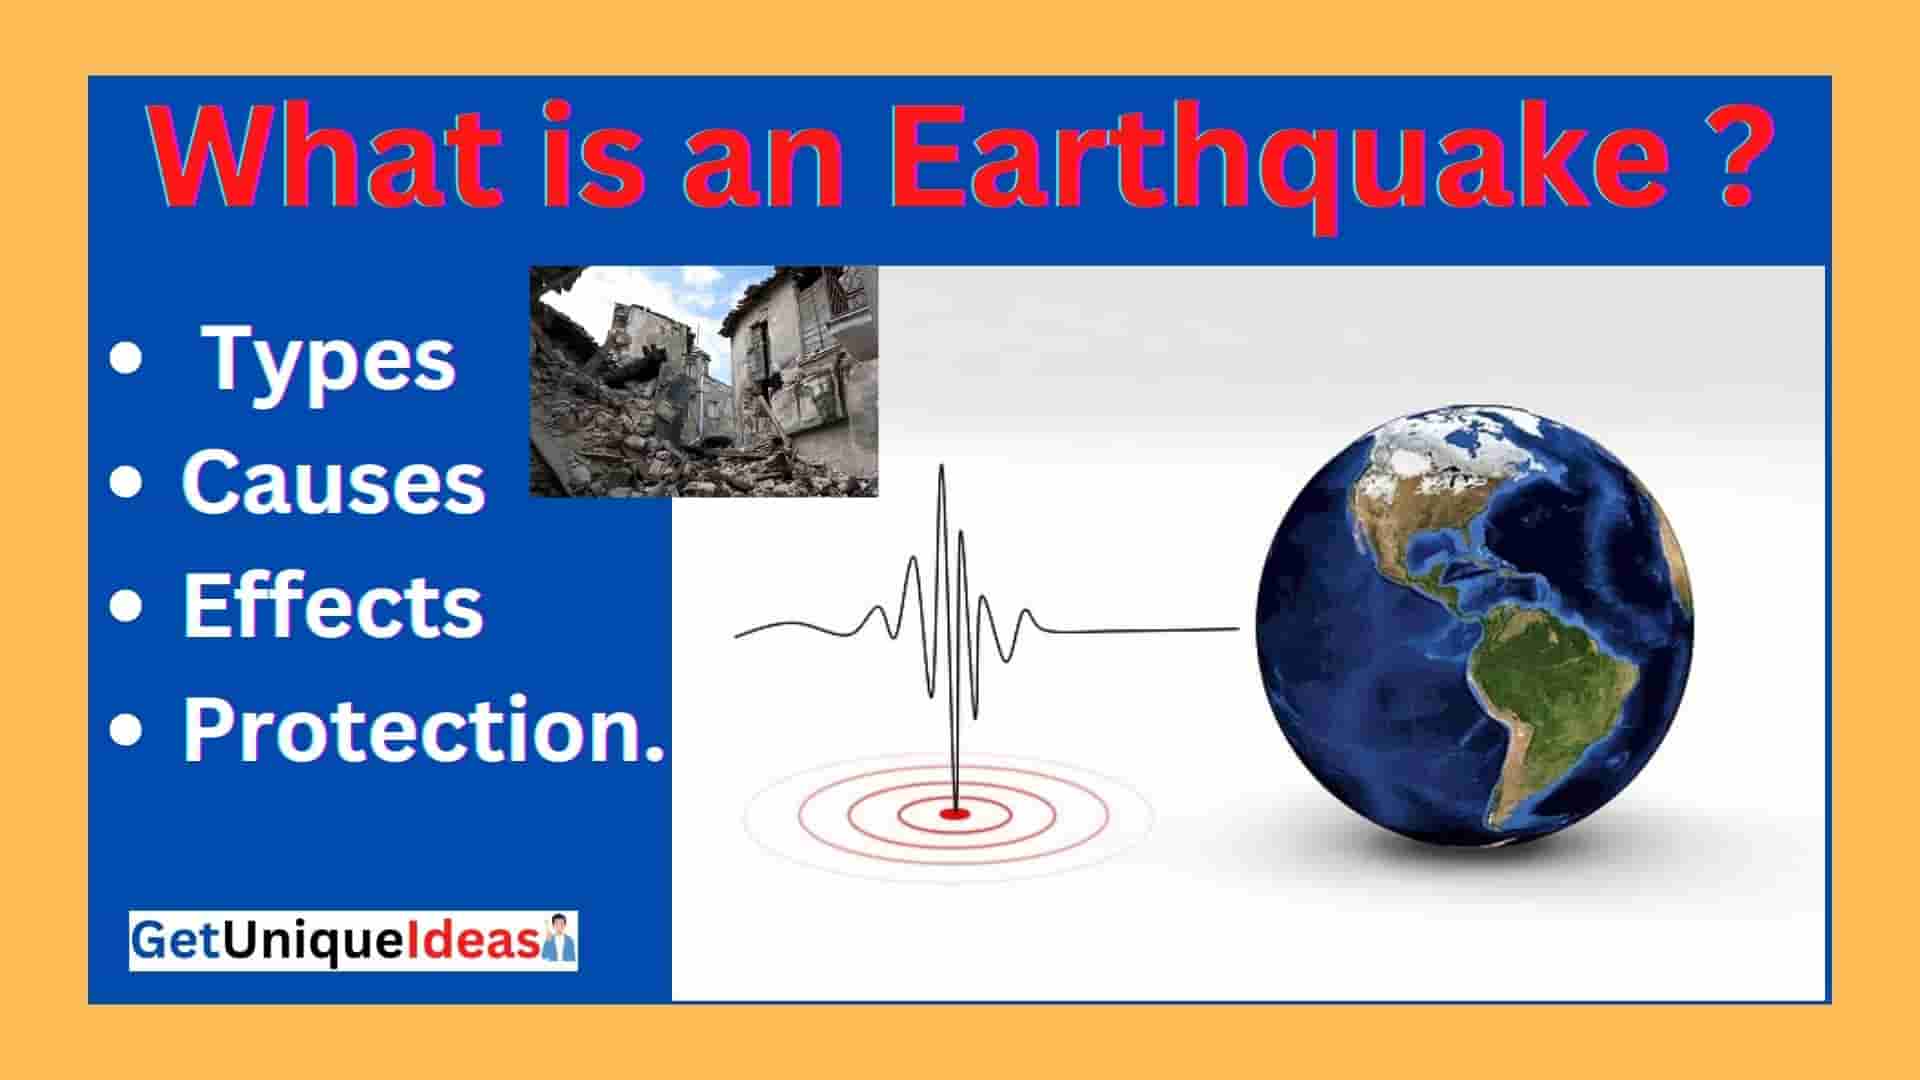 What is an earthquake?